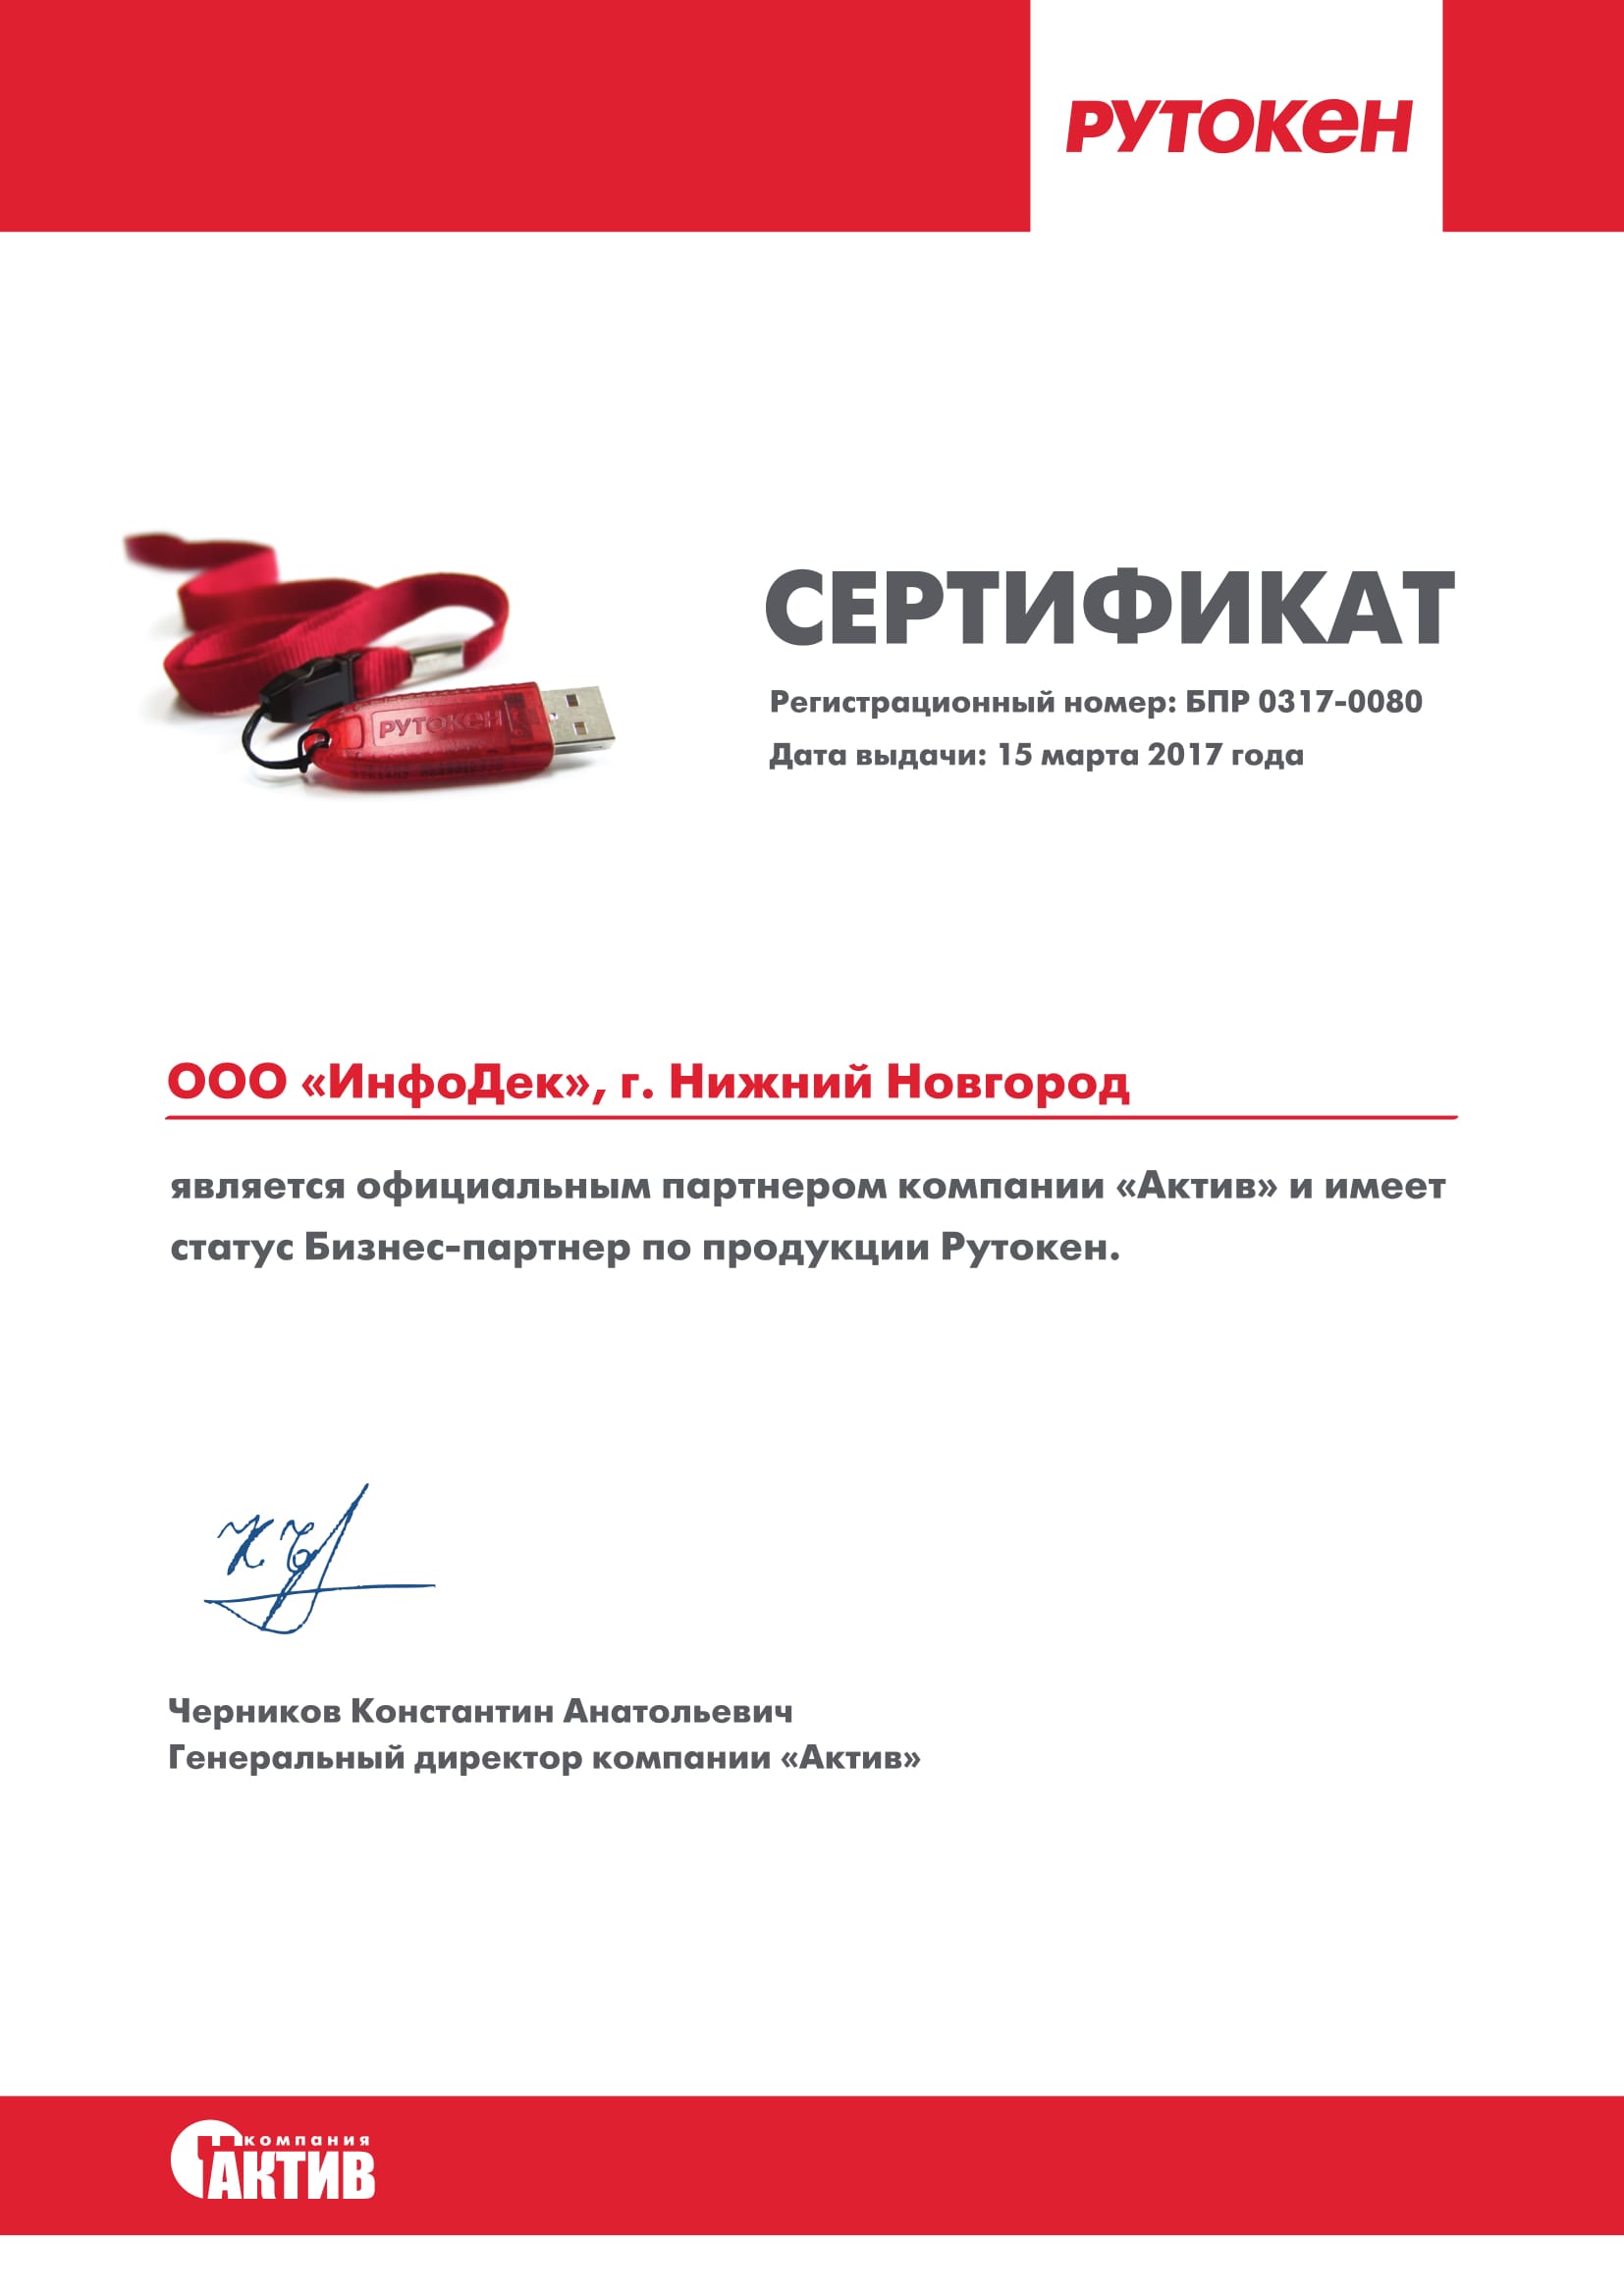 сертификат Рутокен